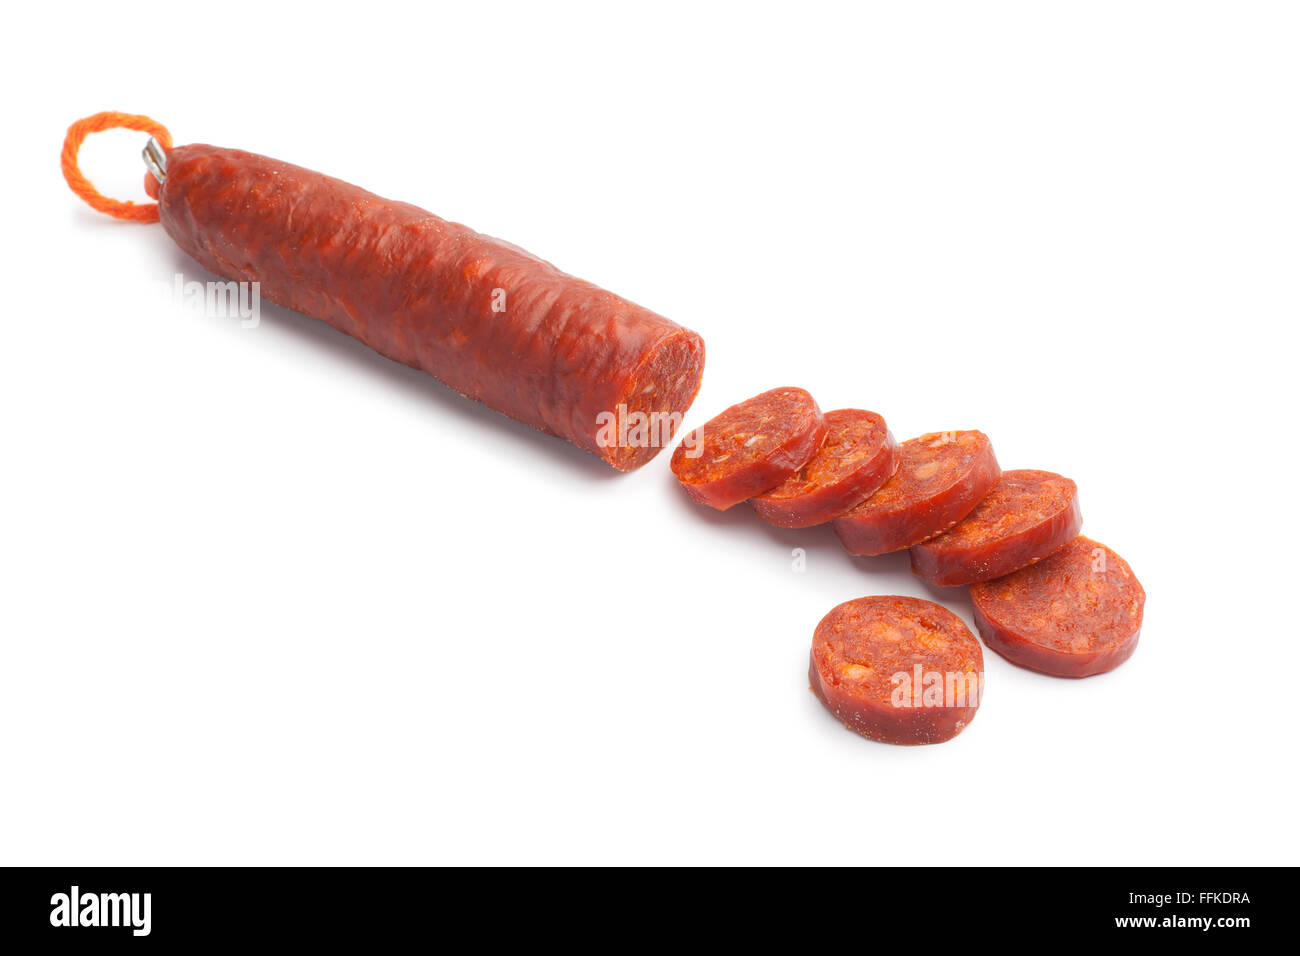 Sliced Spanish chorizo sausage on white background Stock Photo